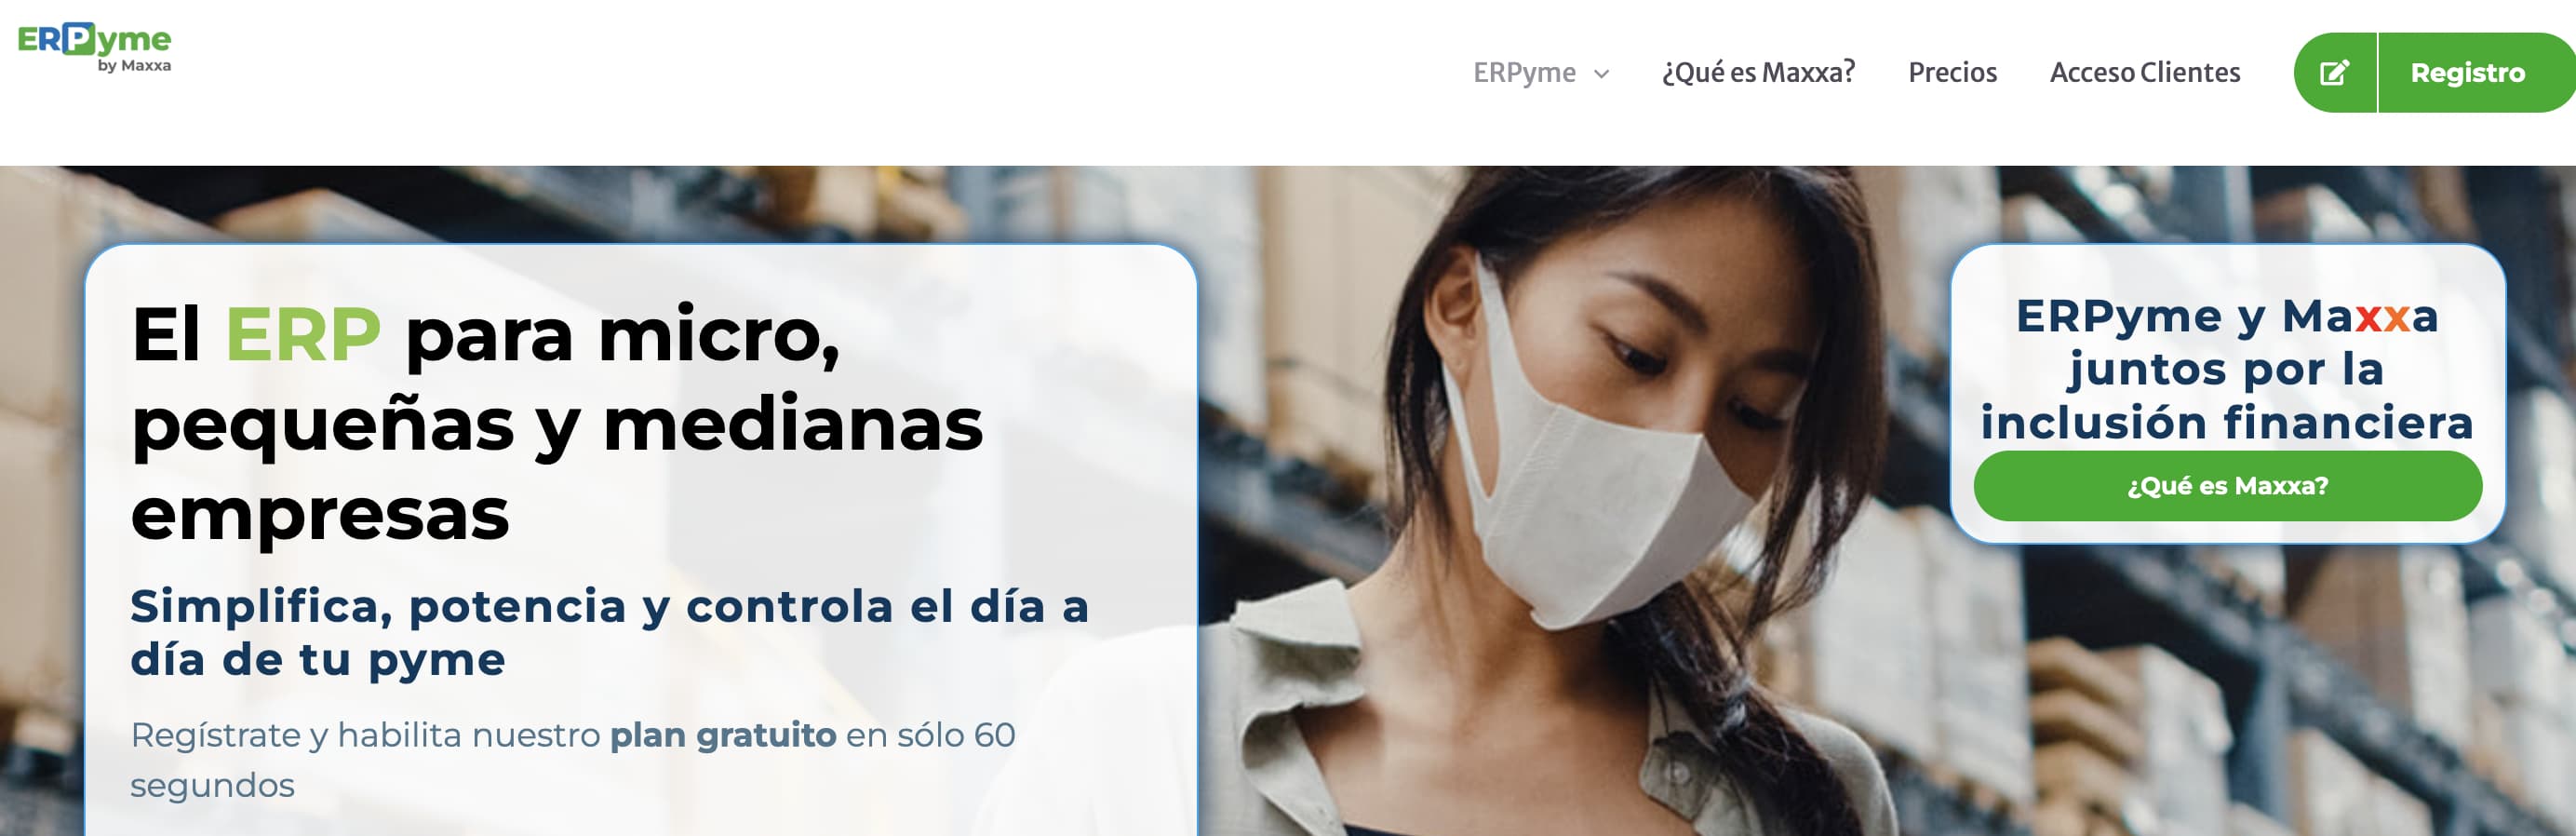 Software de empresas para pymes en Chile: Erpyme